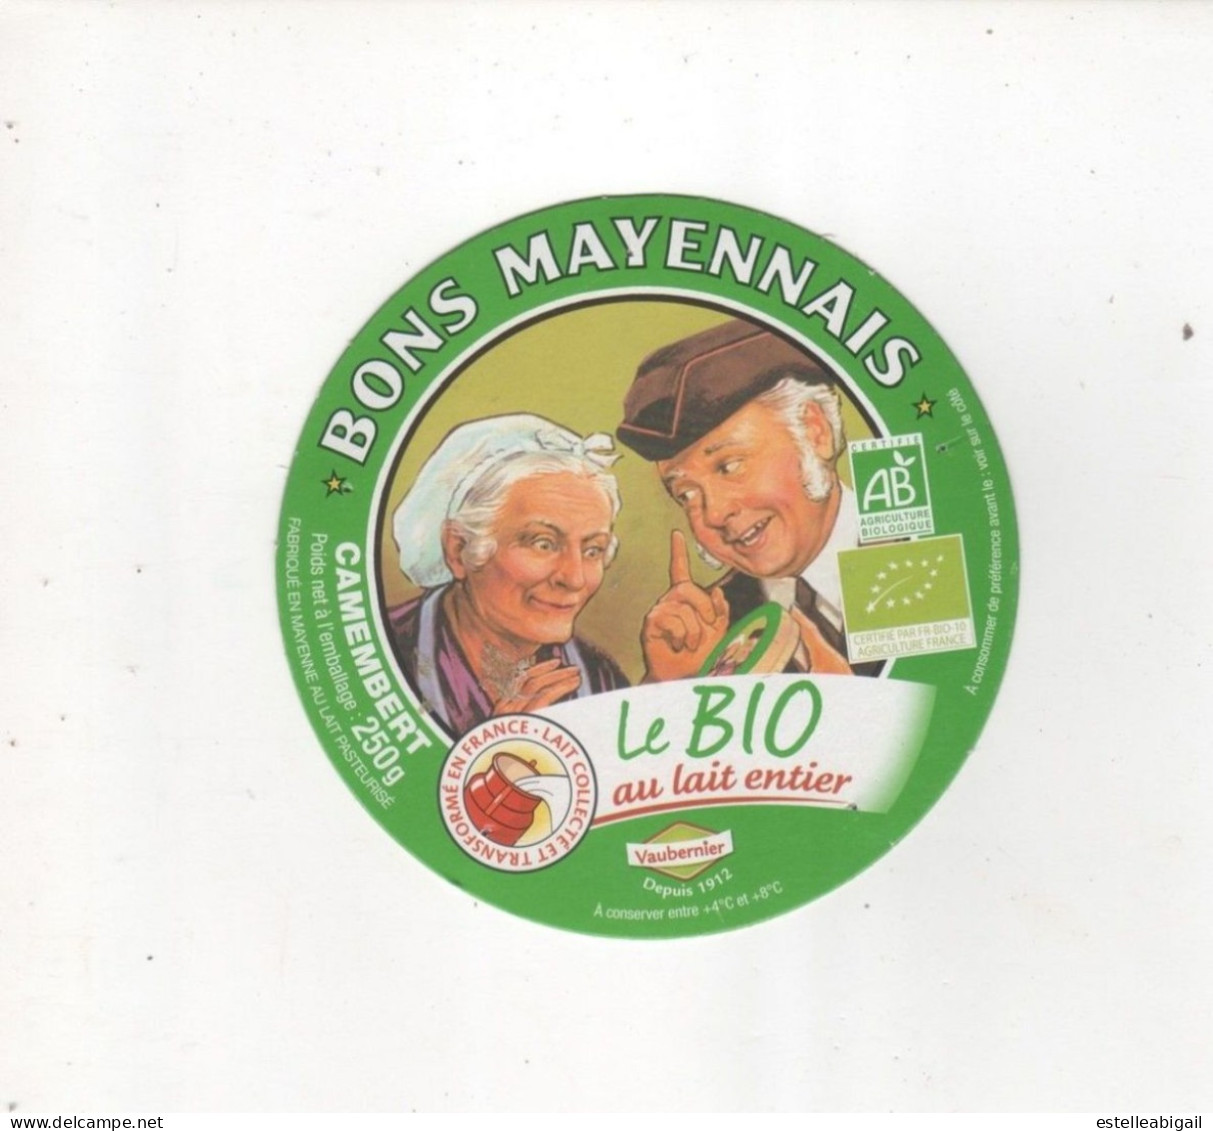 Bons Mayennais Le Bio - Fromage